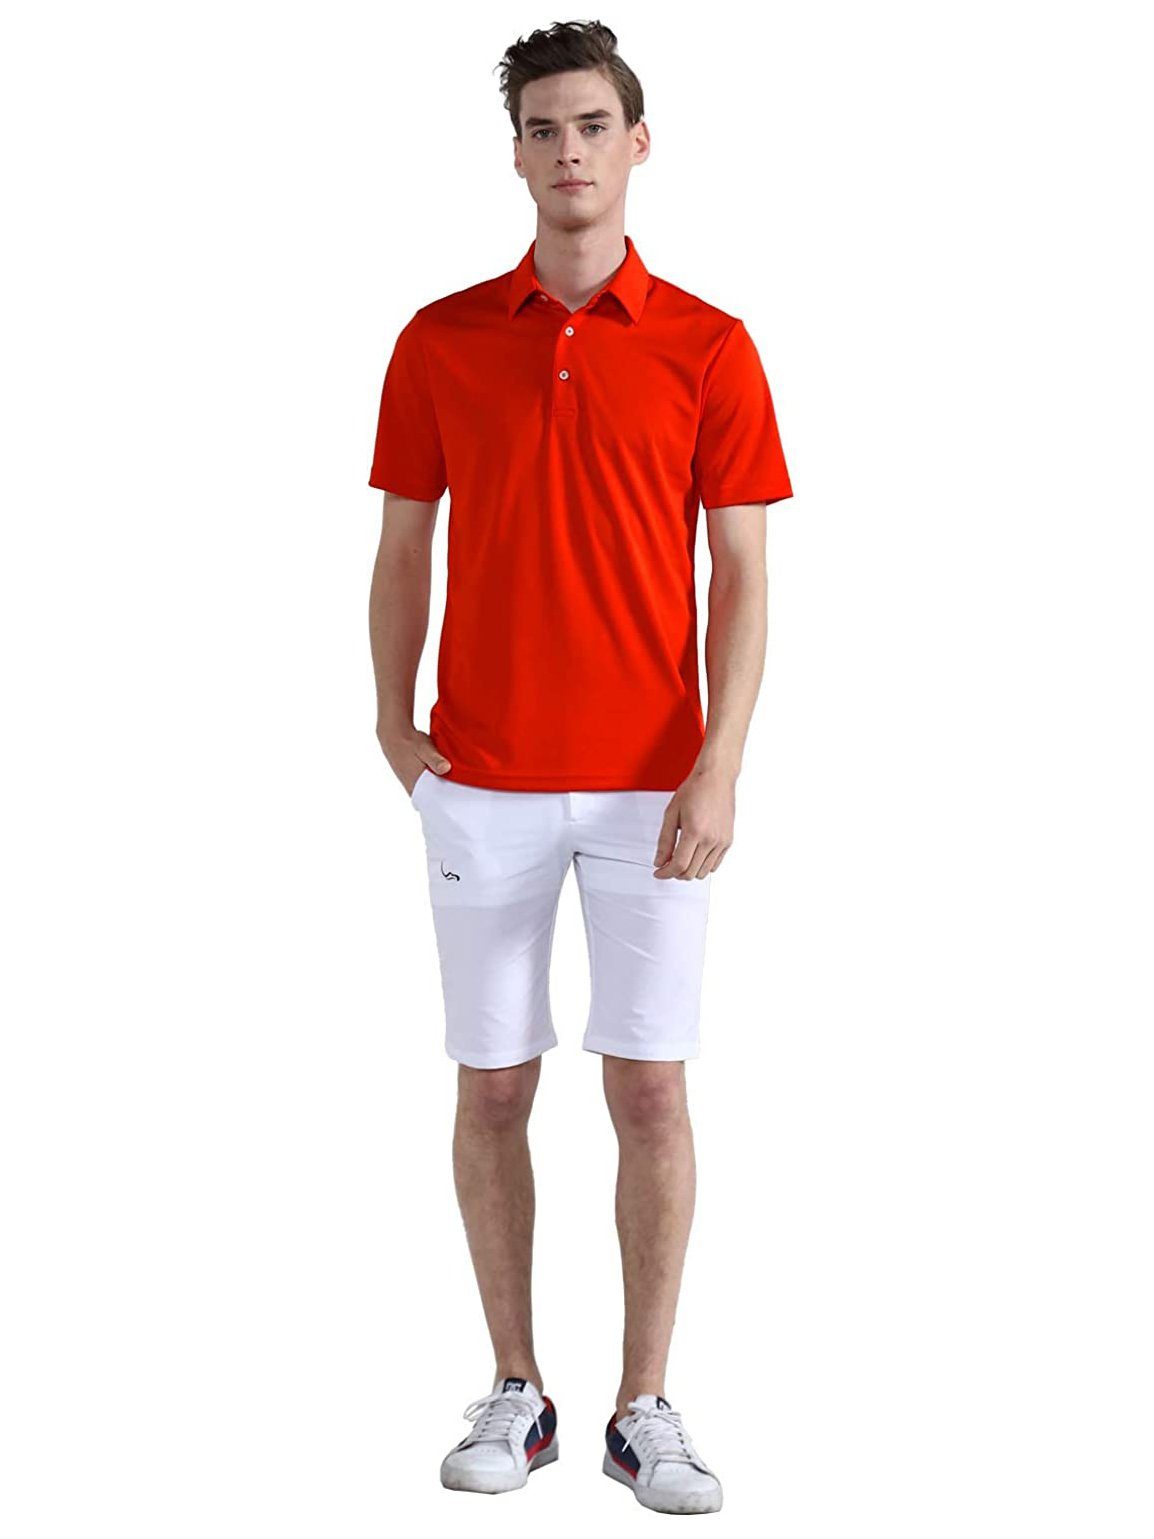 Golf Poloshirt Herren Standard DEBAIJIA Fit Poloshirt Kurzarm Leicht Gemütlich Orange DEBAIJIA